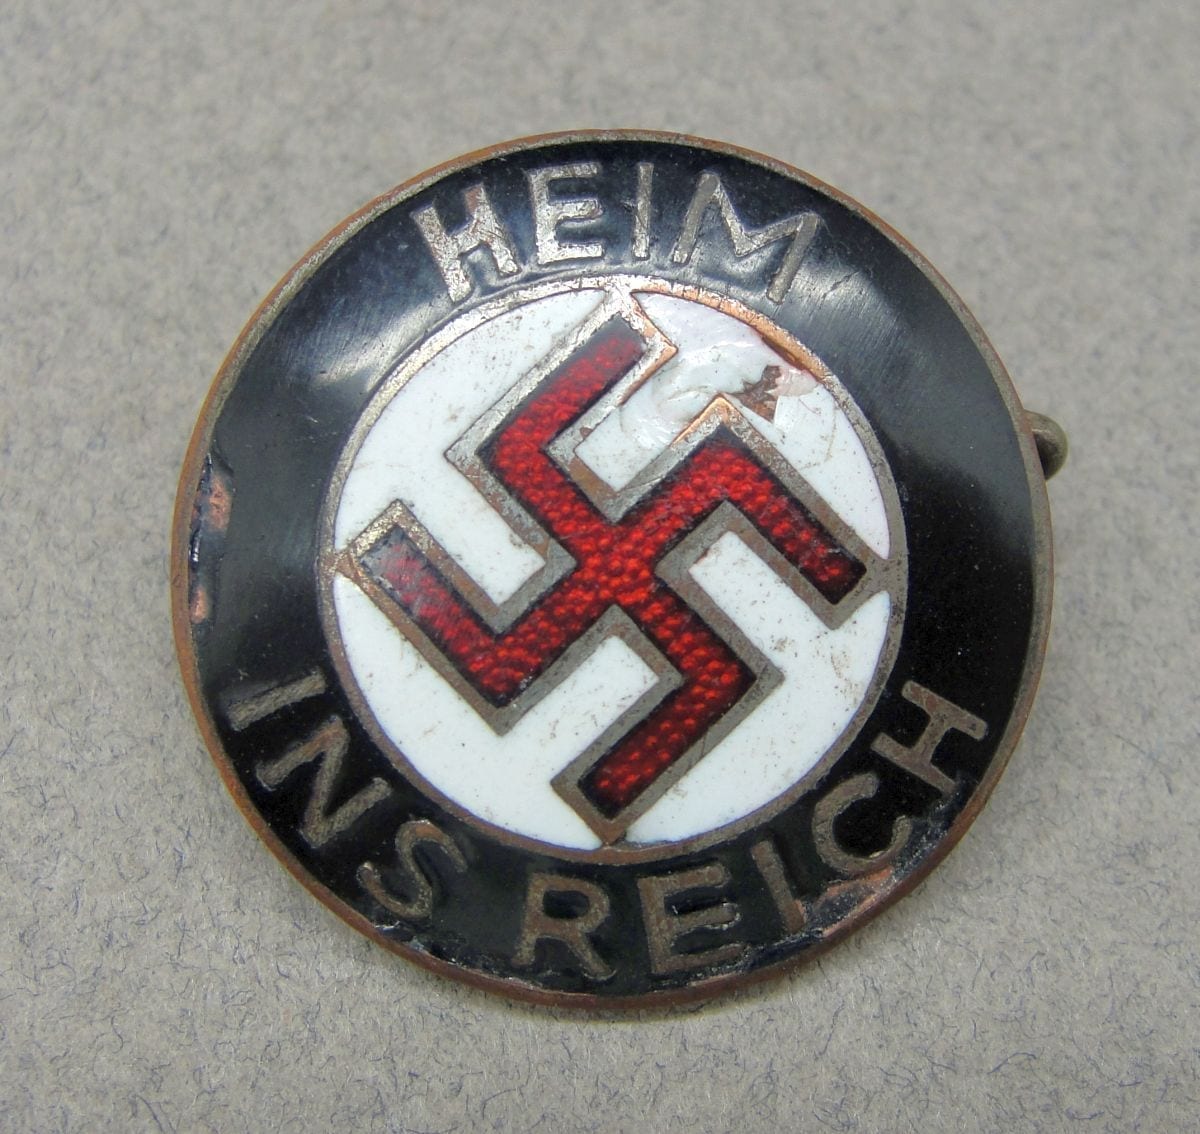 Heim Ins Reich Membership Badge